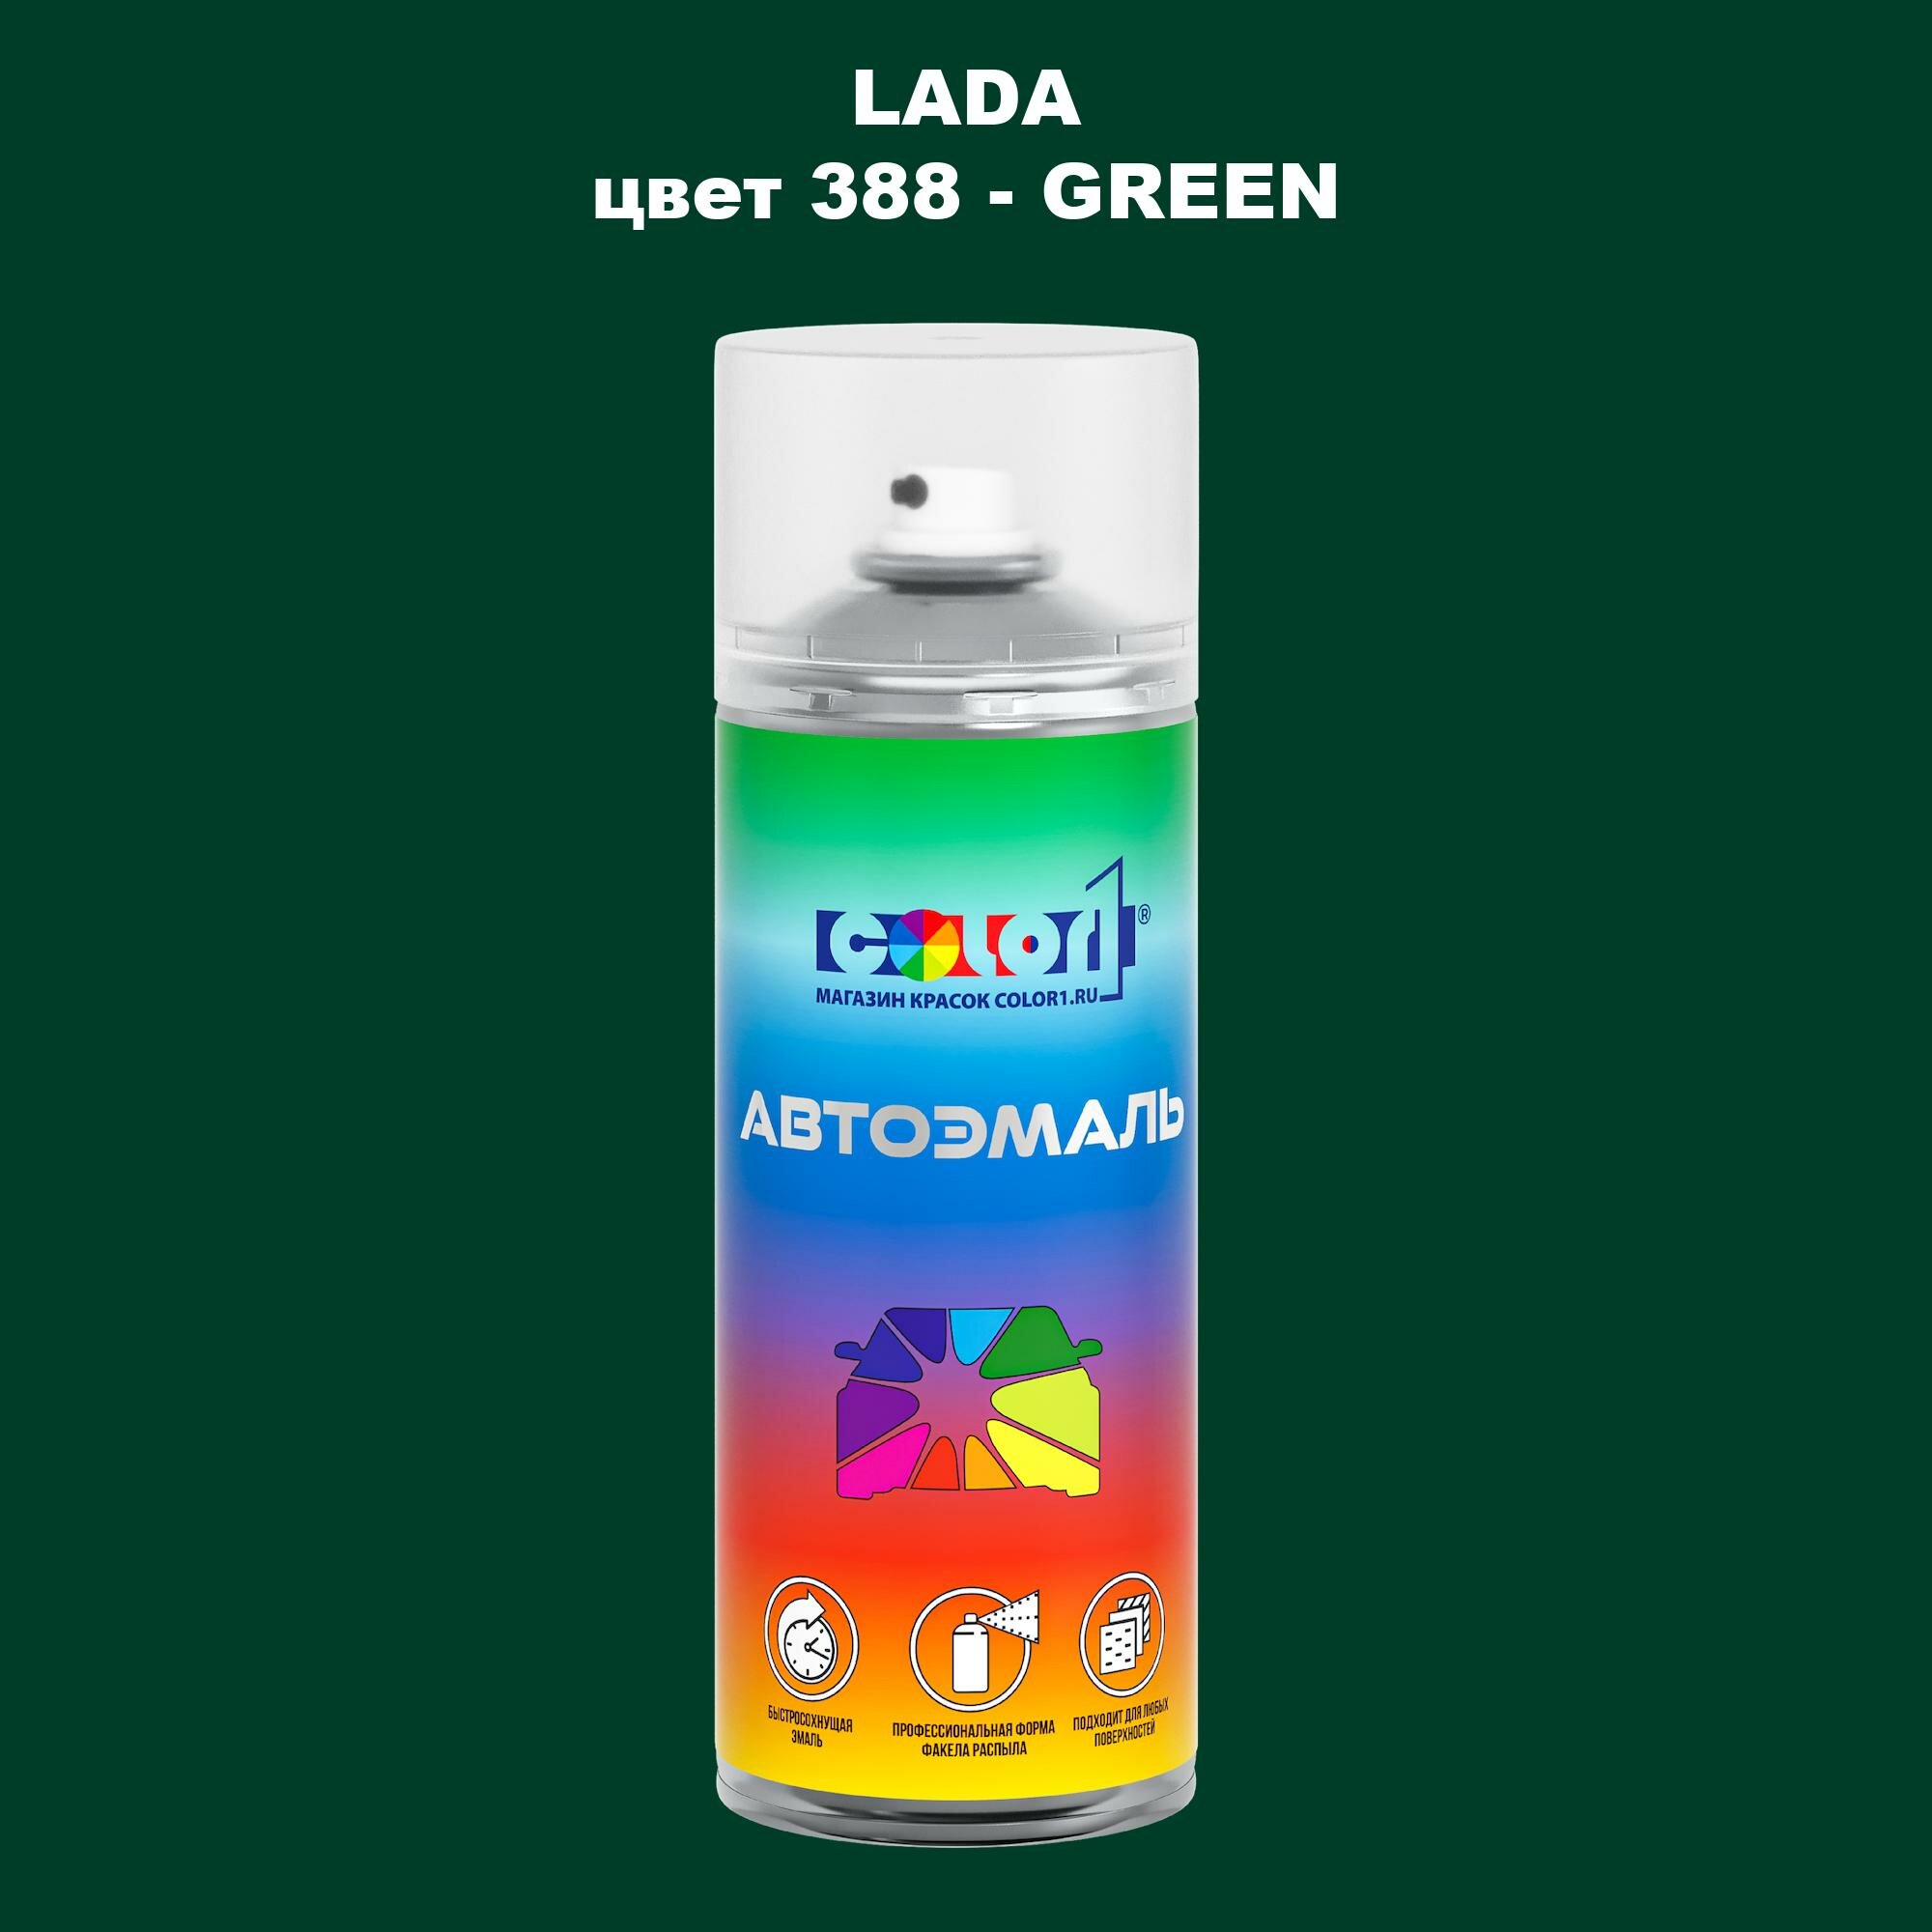 Аэрозольная краска COLOR1 для LADA цвет 388 - GREEN